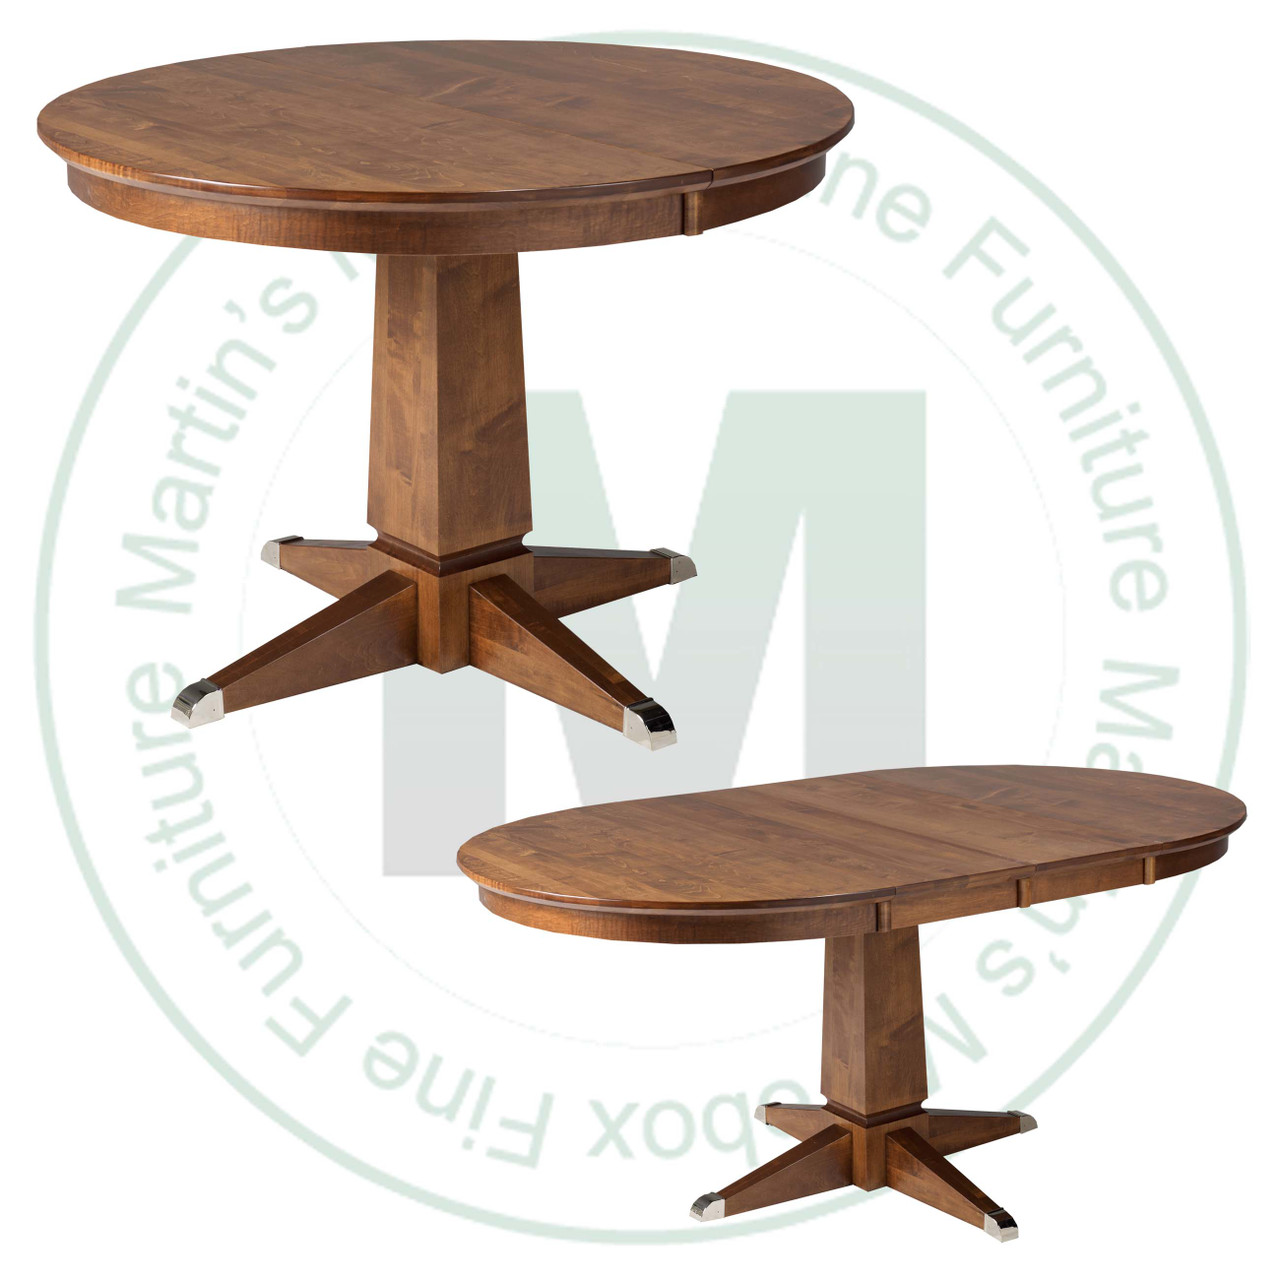 Wormy Maple Danish Single Pedestal Table 36''D x 42''W x 30''H With 1 - 12'' Leaf